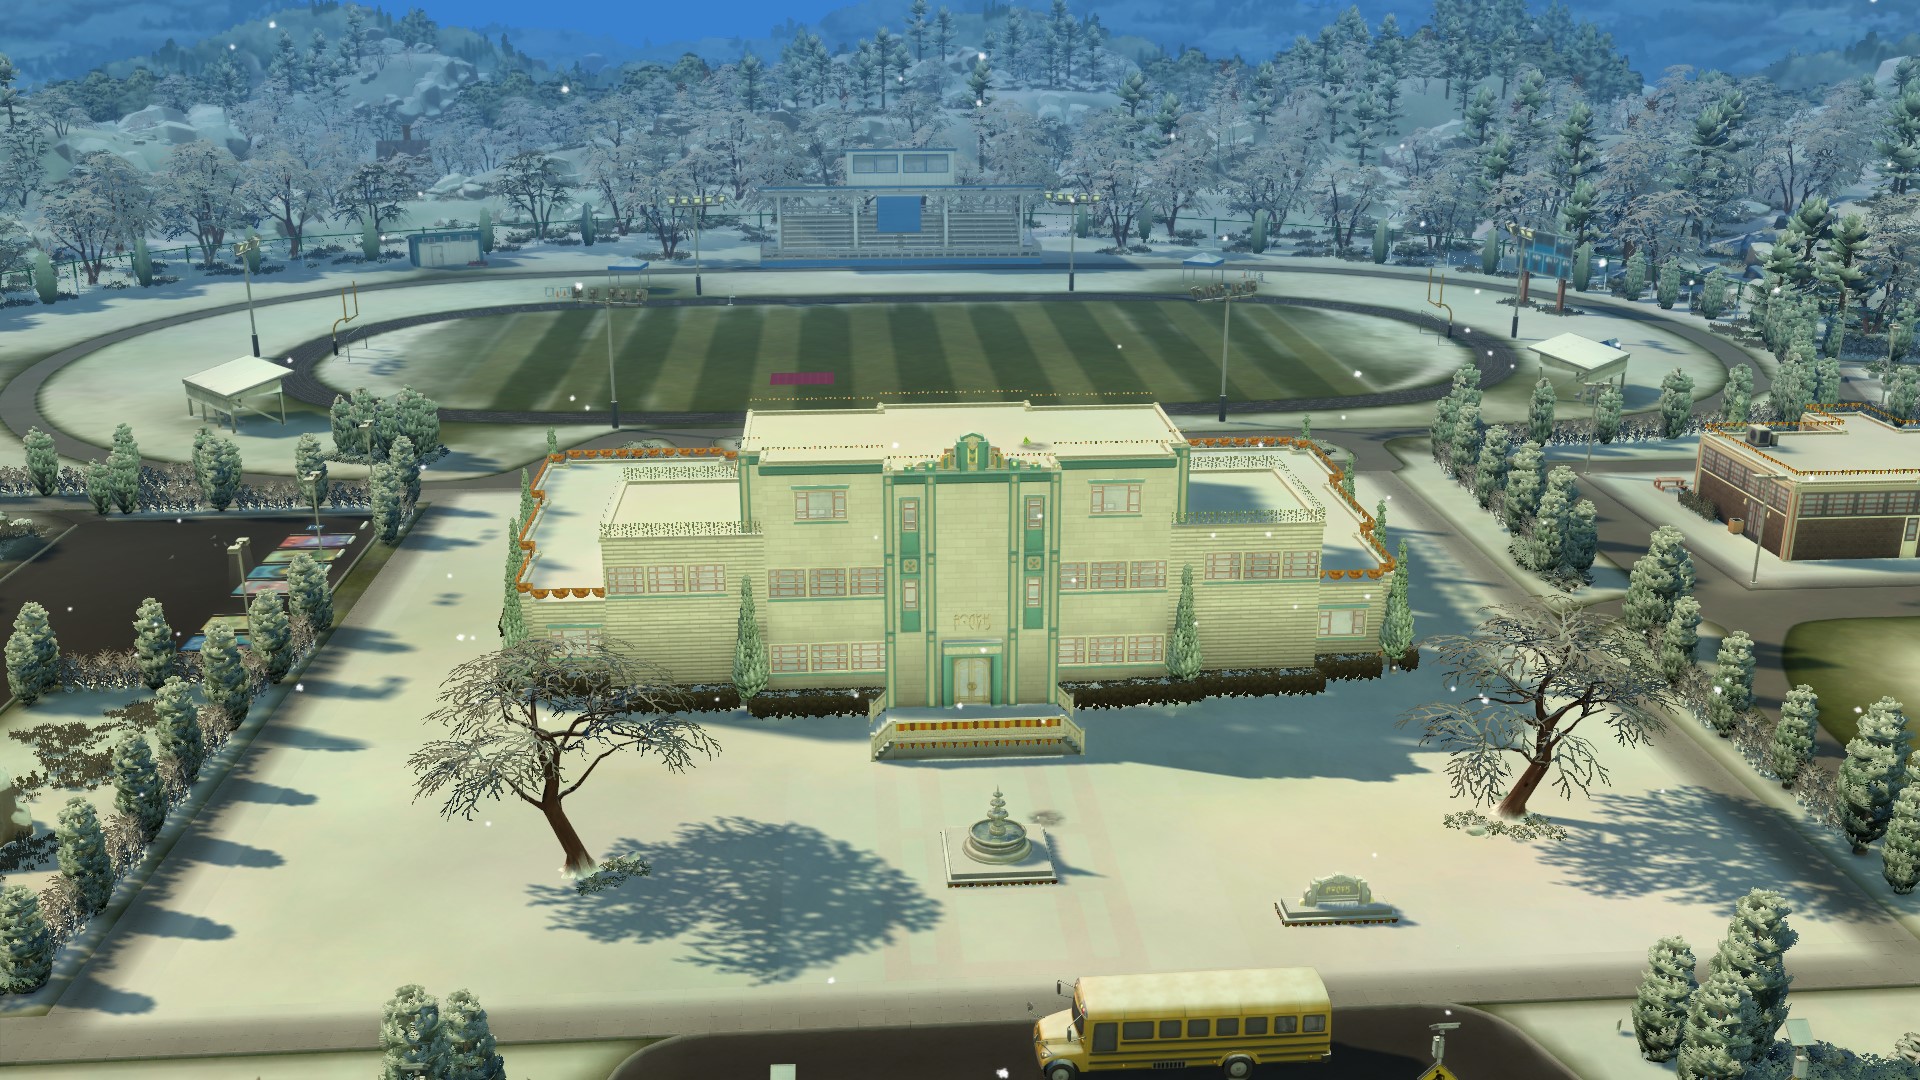 The Sims 4 Vida no Ensino Médio é lançado! - Alala Sims